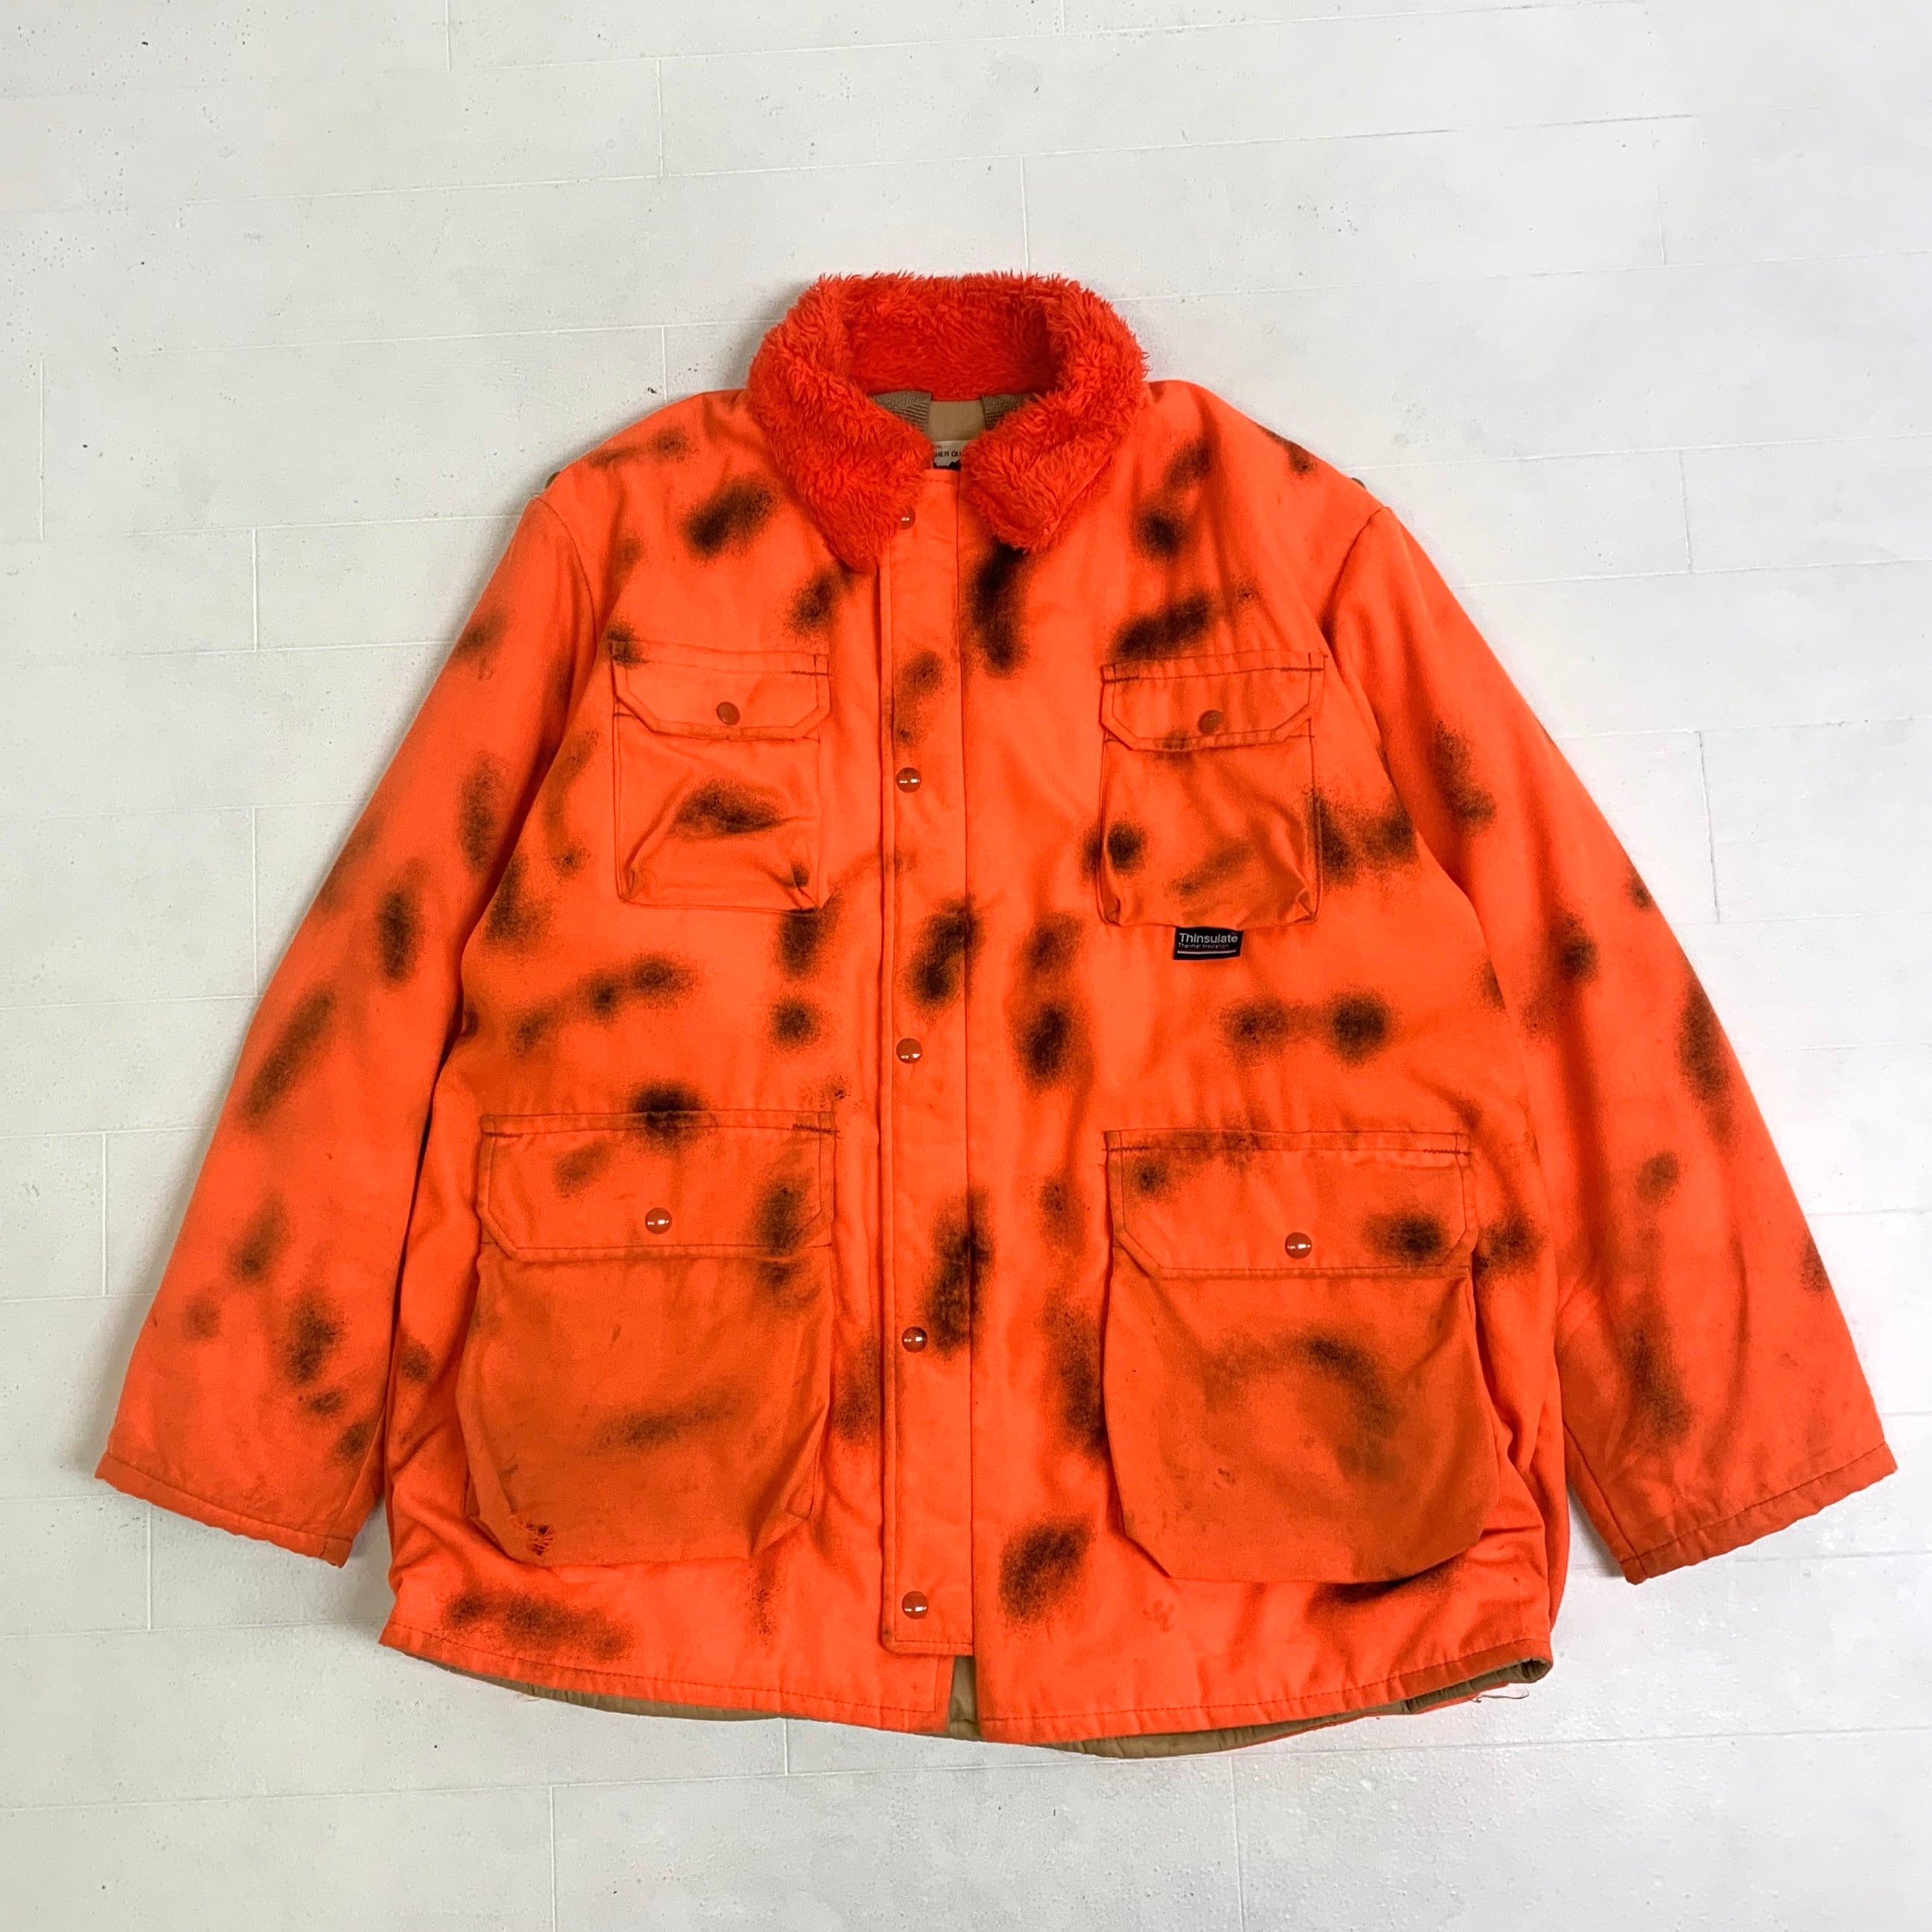 1990's hunting jacket with shoulder strap オレンジ 迷彩 カモ ハンティングジャケット ショルダーストラップ  アメリカ製 USA製 90s 90年代 vintage 古着 1447